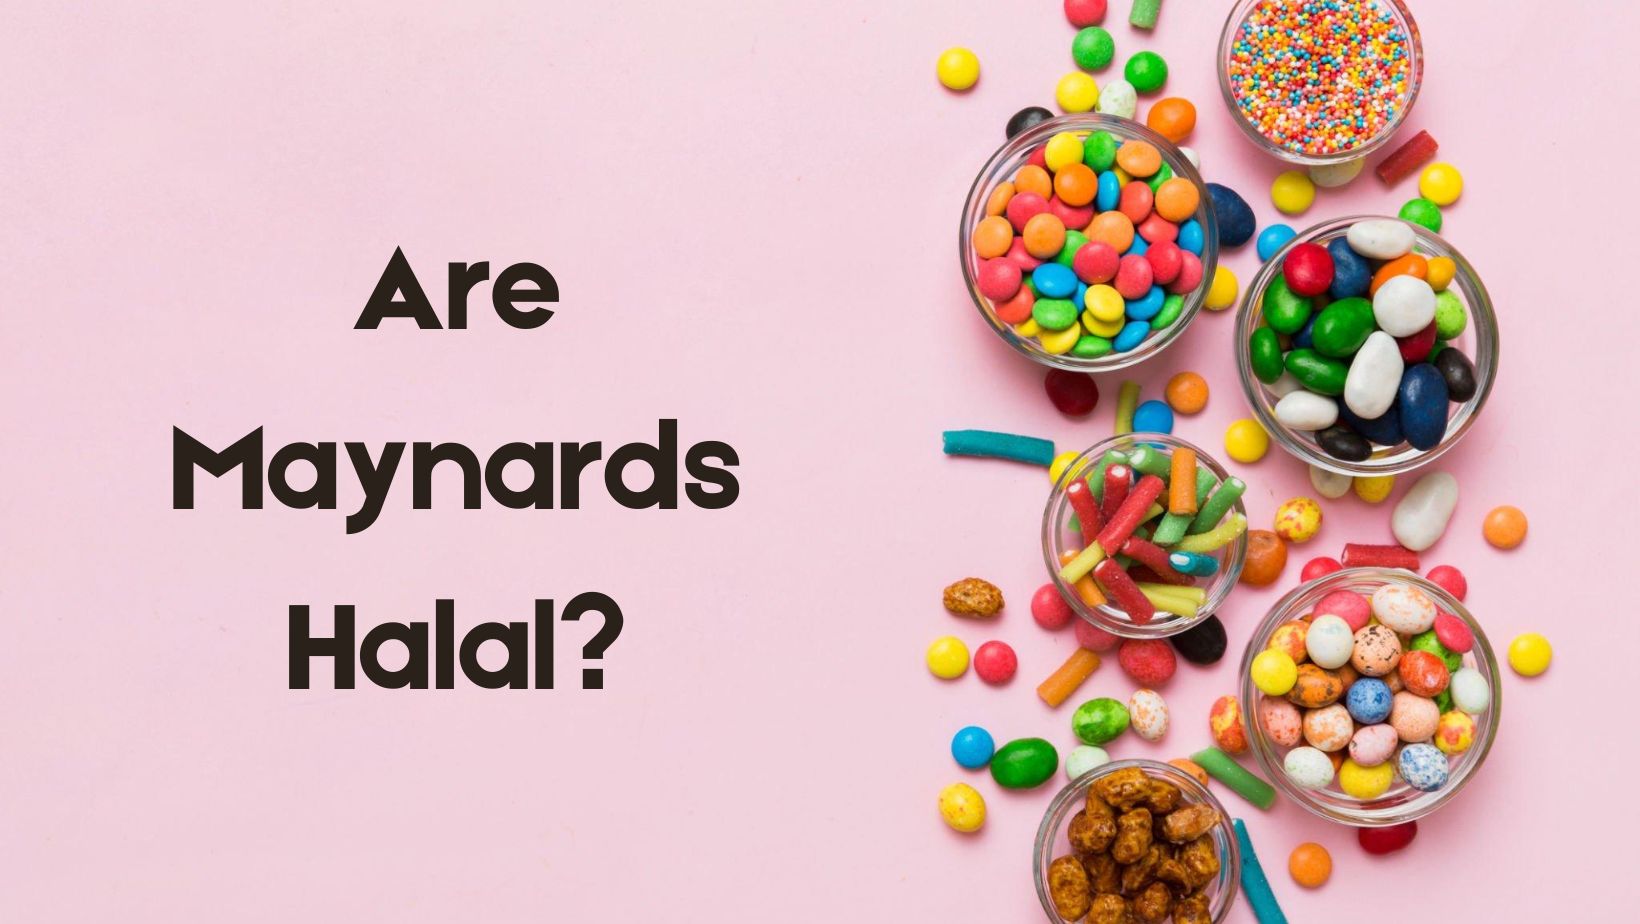 Are Maynards Halal?